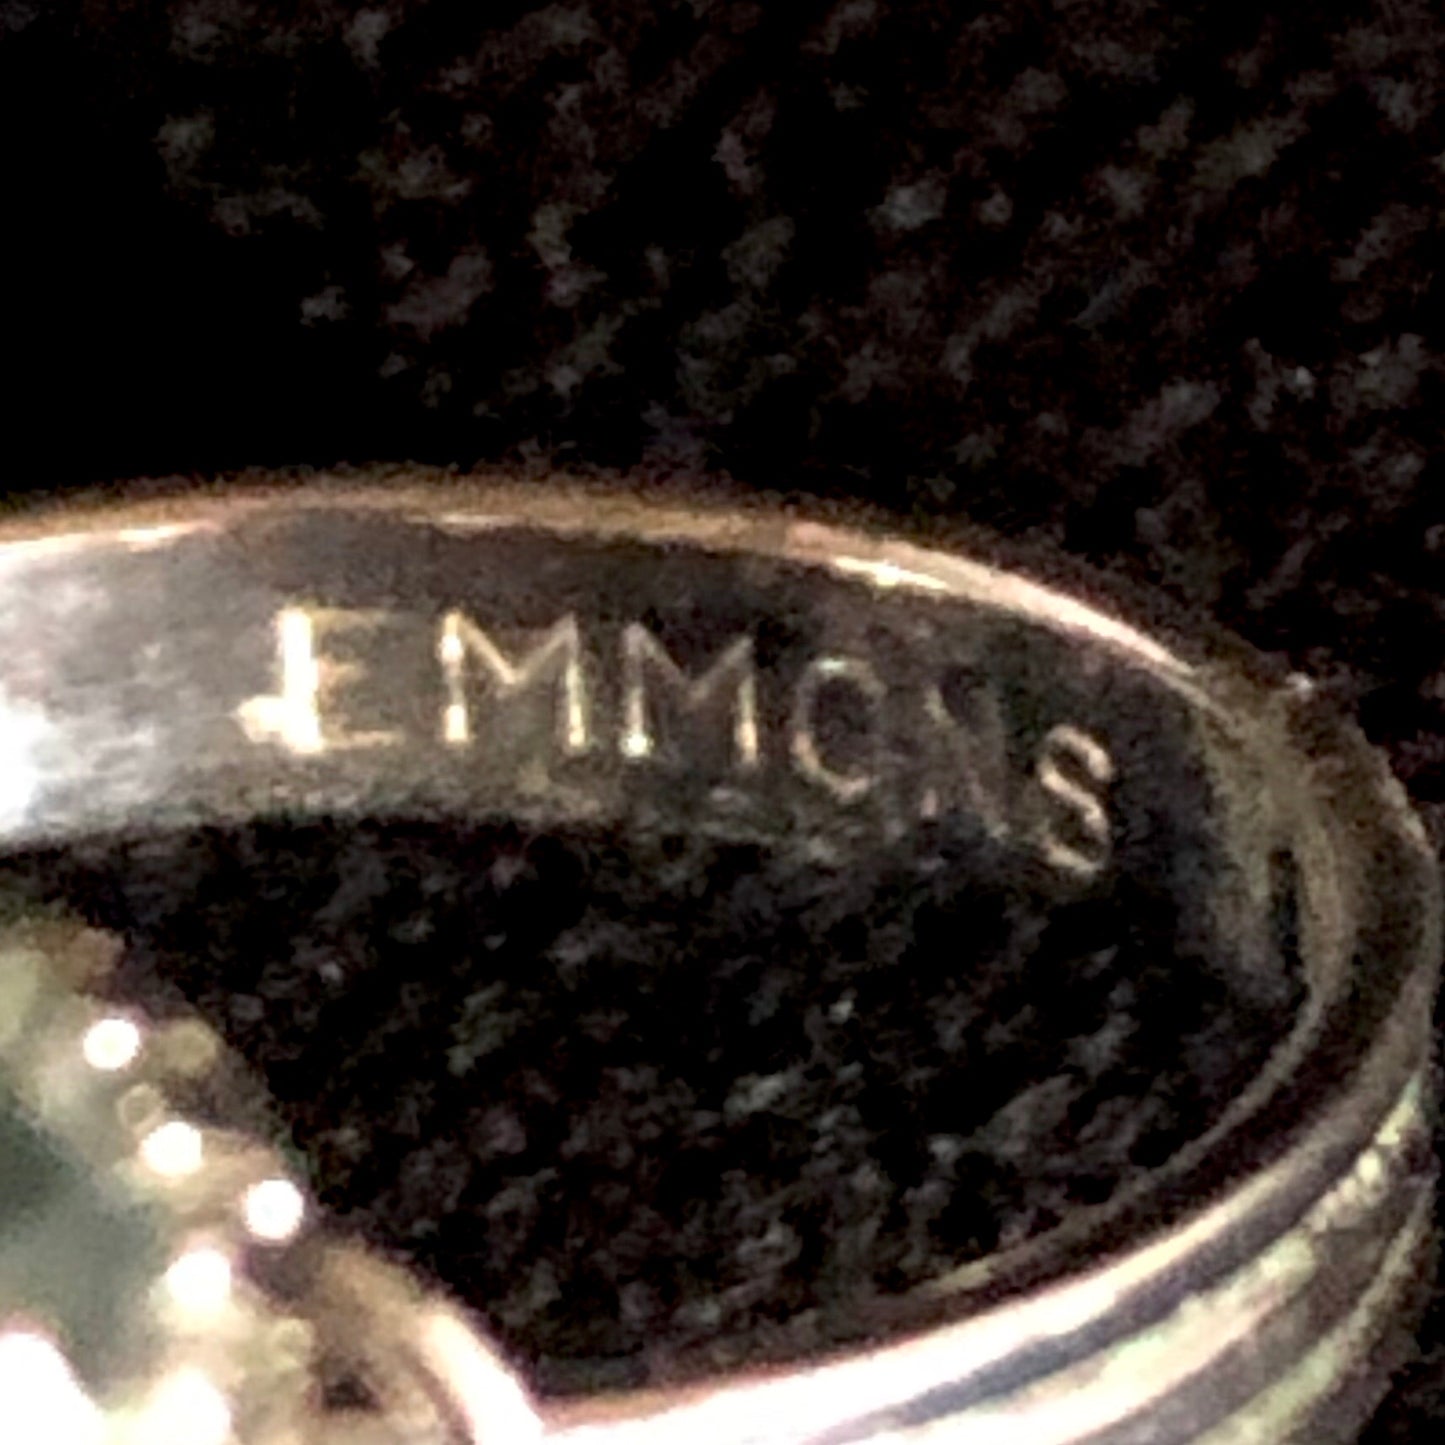 1974 Emmons Crystal Lights Ring - Retro Kandy Vintage